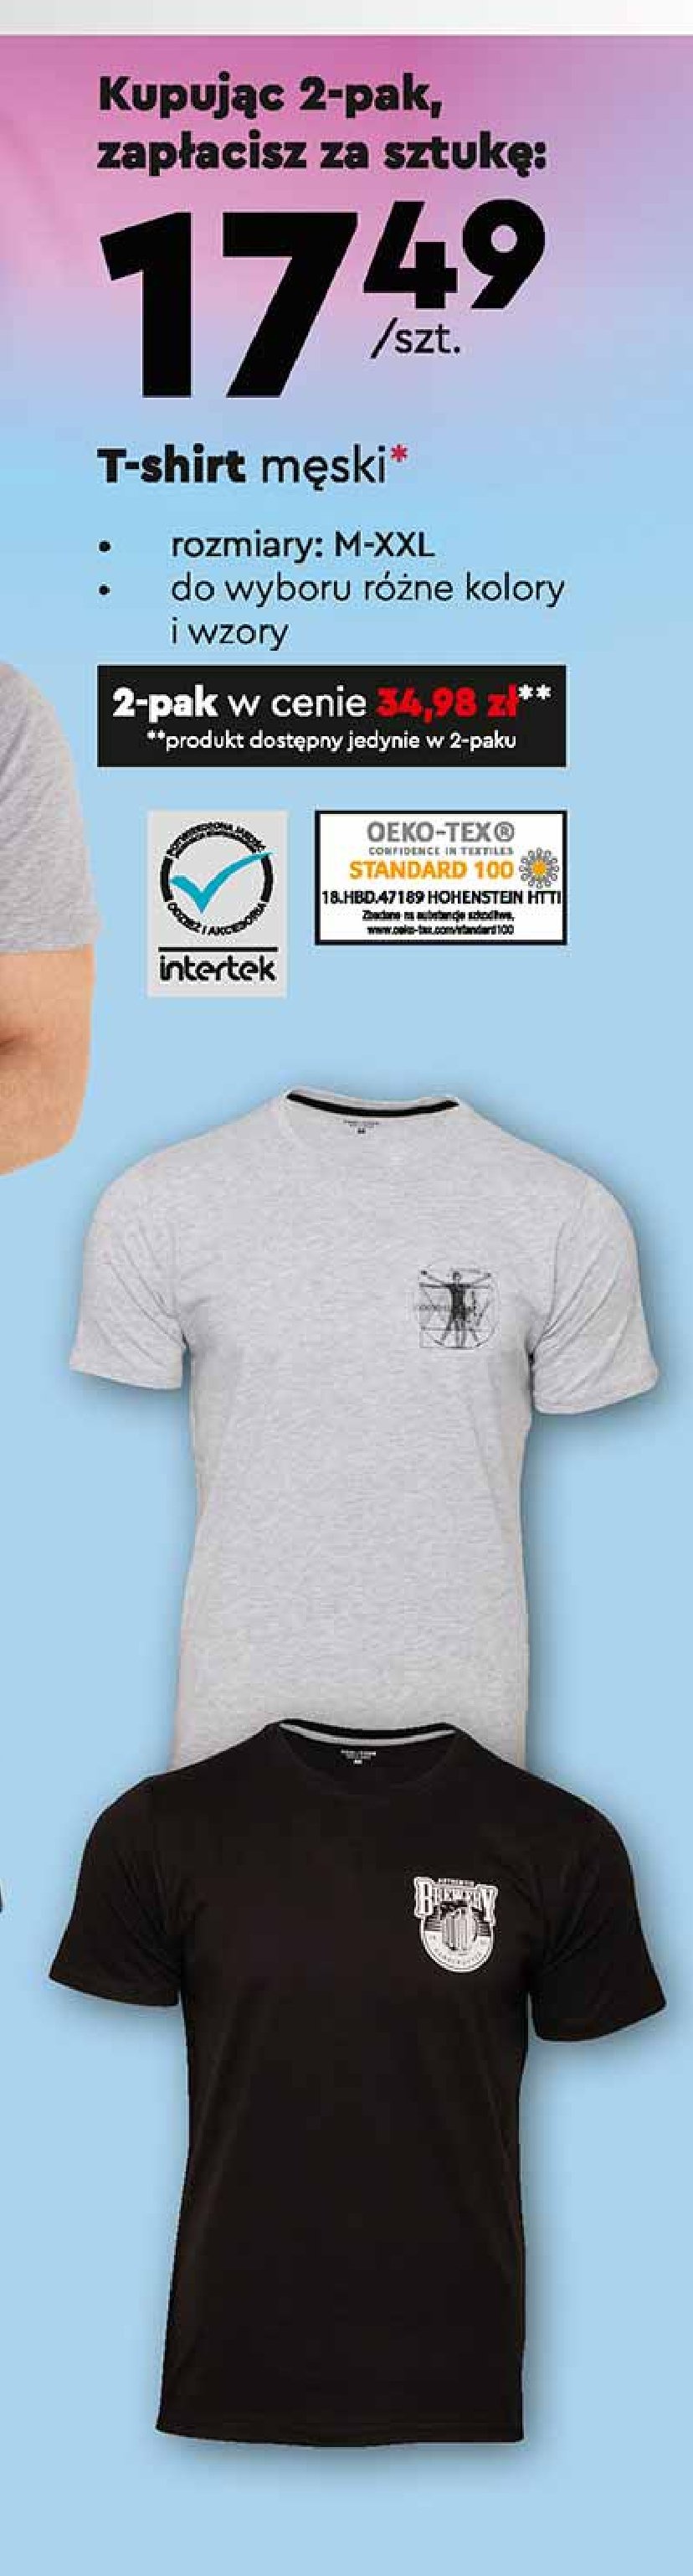 T-shirt męski m-xxl Tom & rose promocje